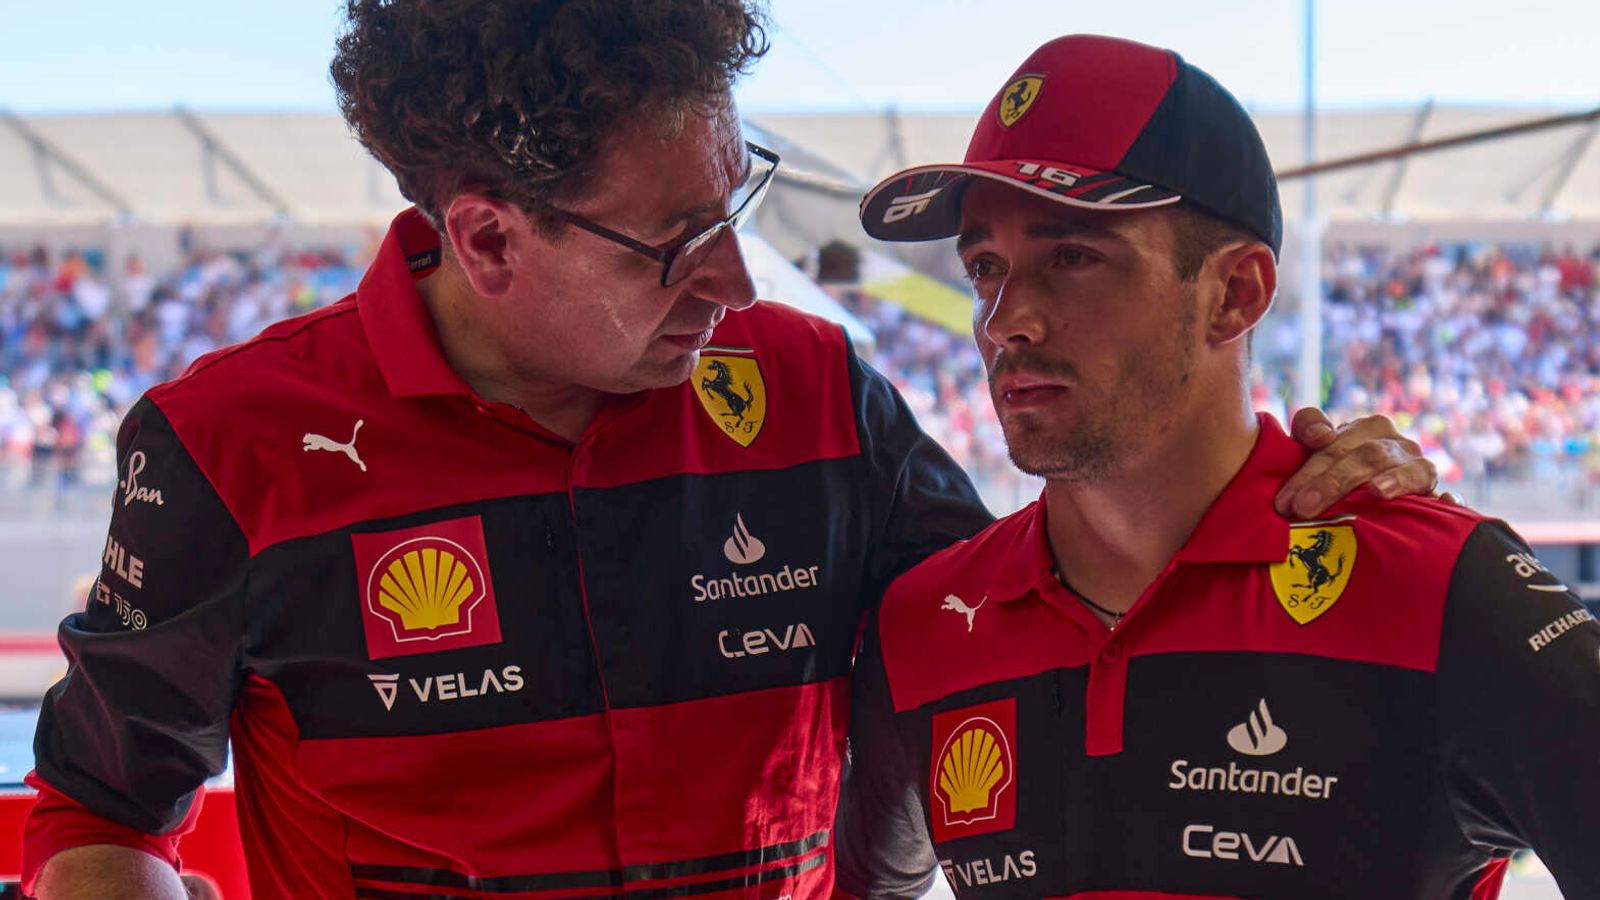 Ferrari: No changes needed despite F1 errors as Charles Leclerc faces mammoth Max Verstappen task